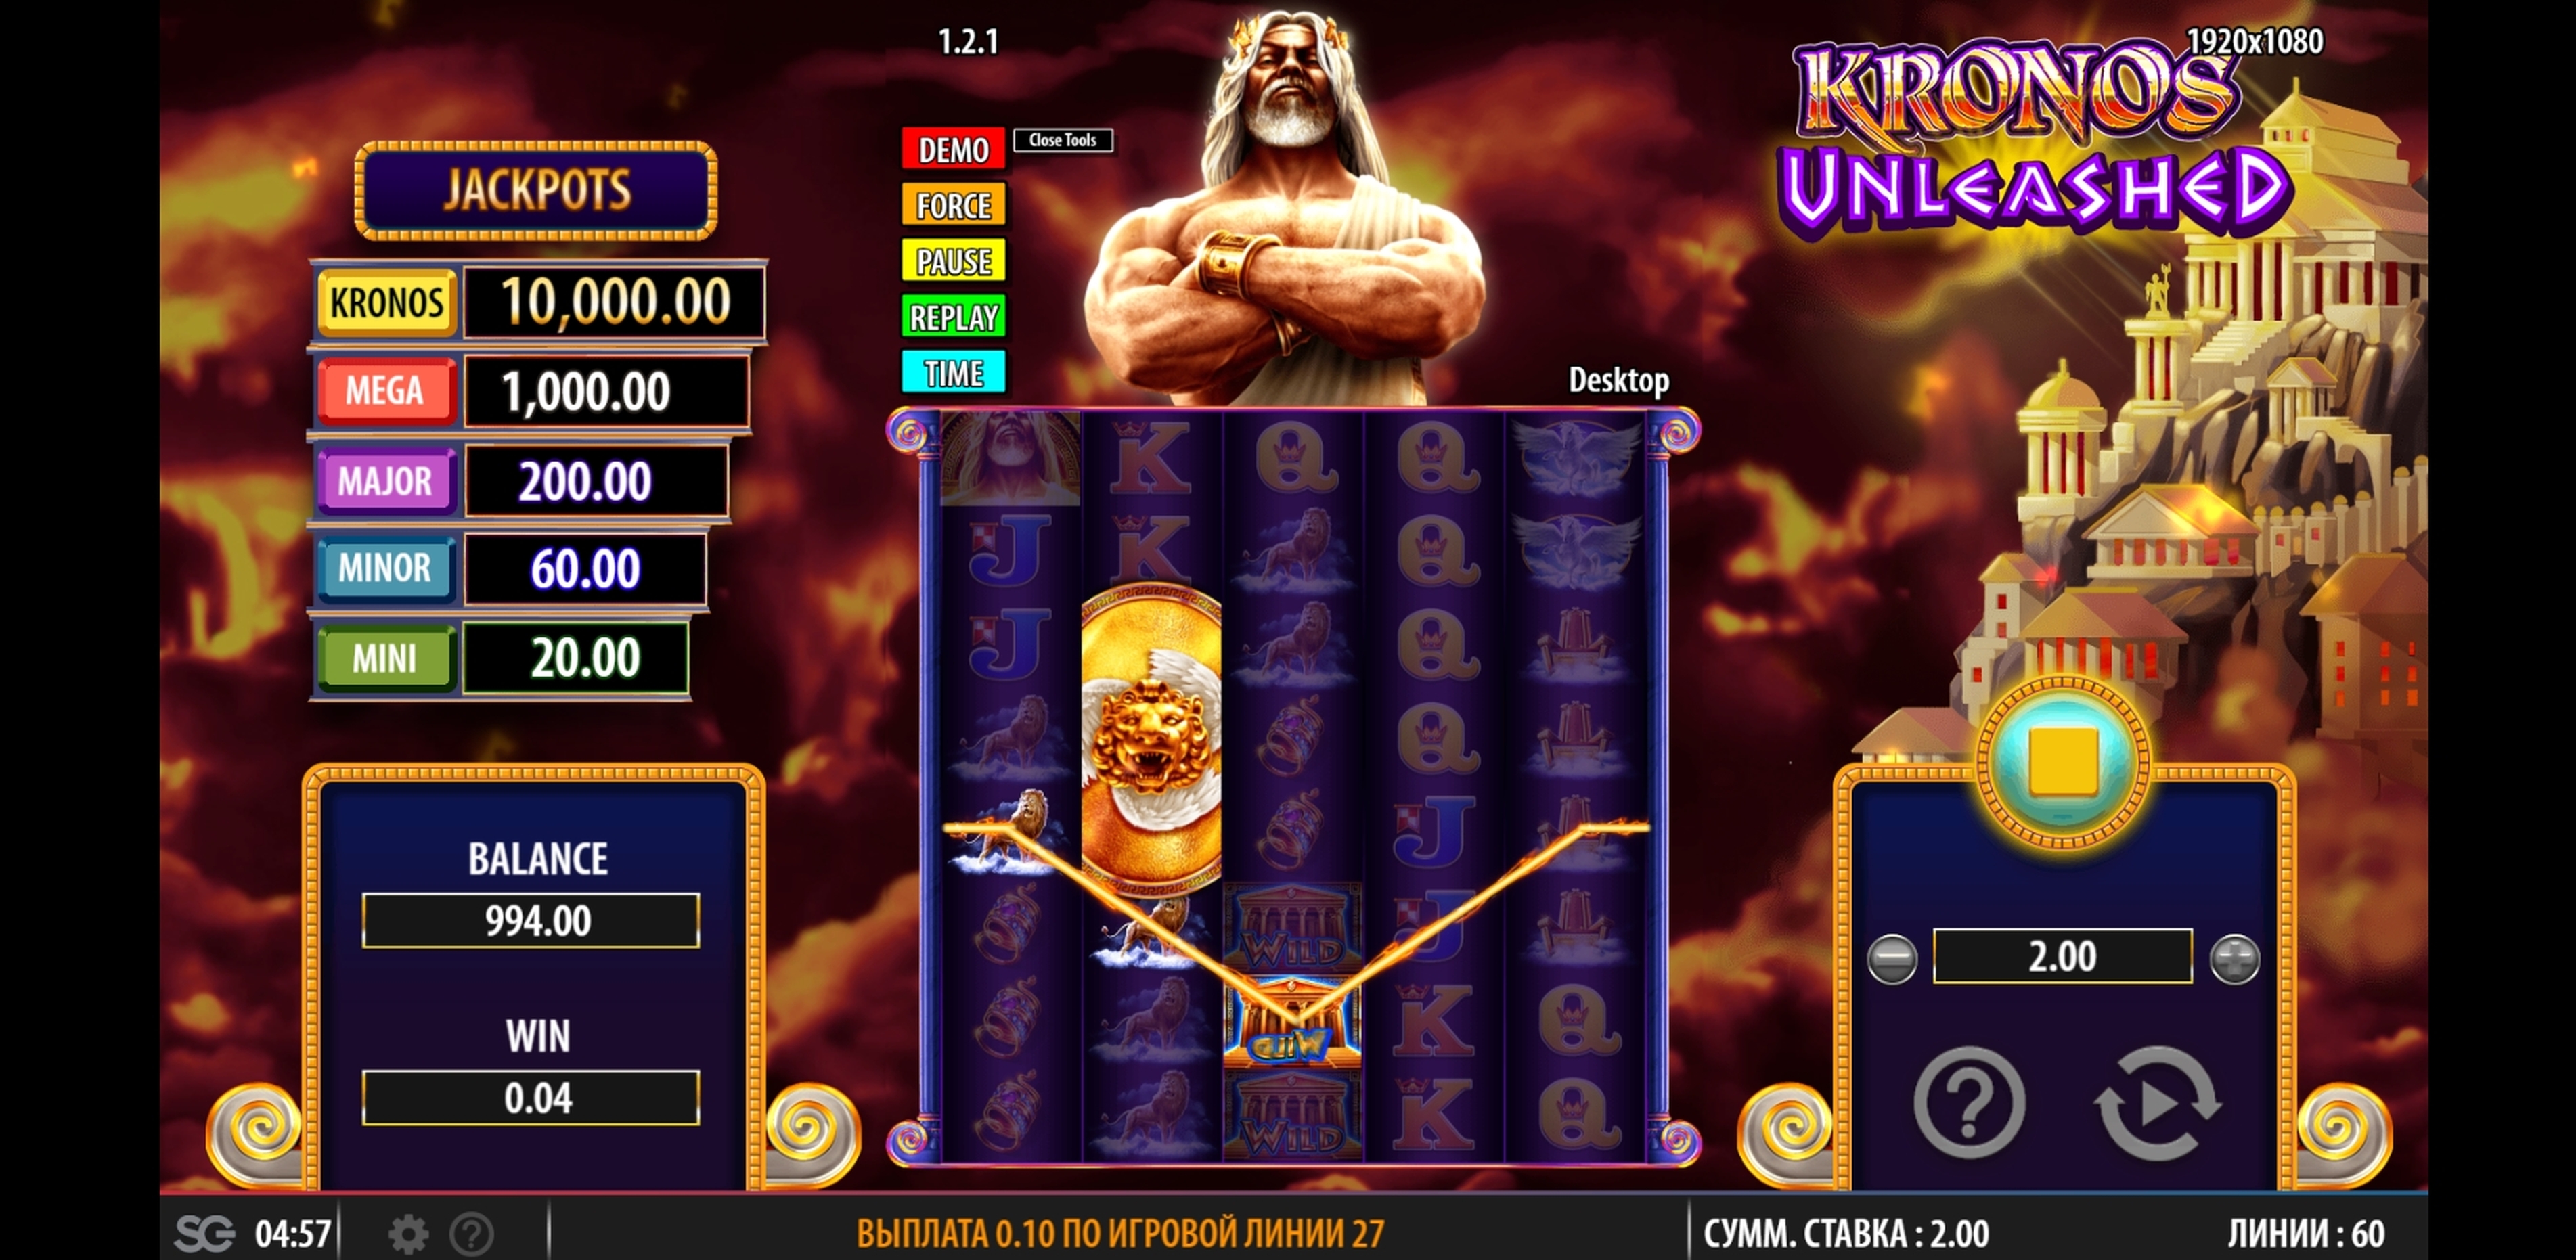 Kronos Slot Machine online, free